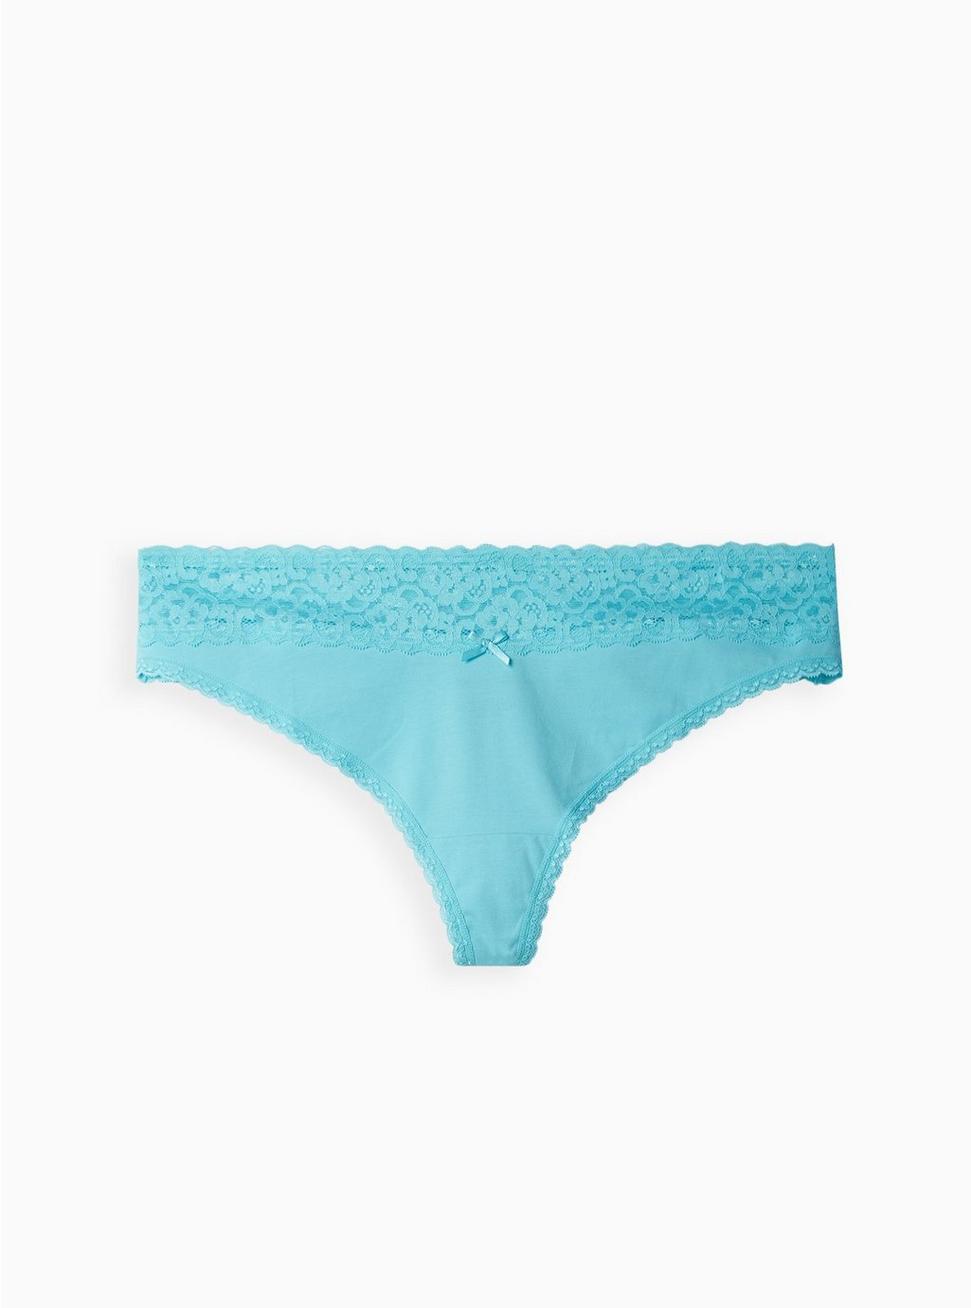 Cotton Mid-Rise Thong Lace Trim Panty, BLUE RADIANCE, hi-res